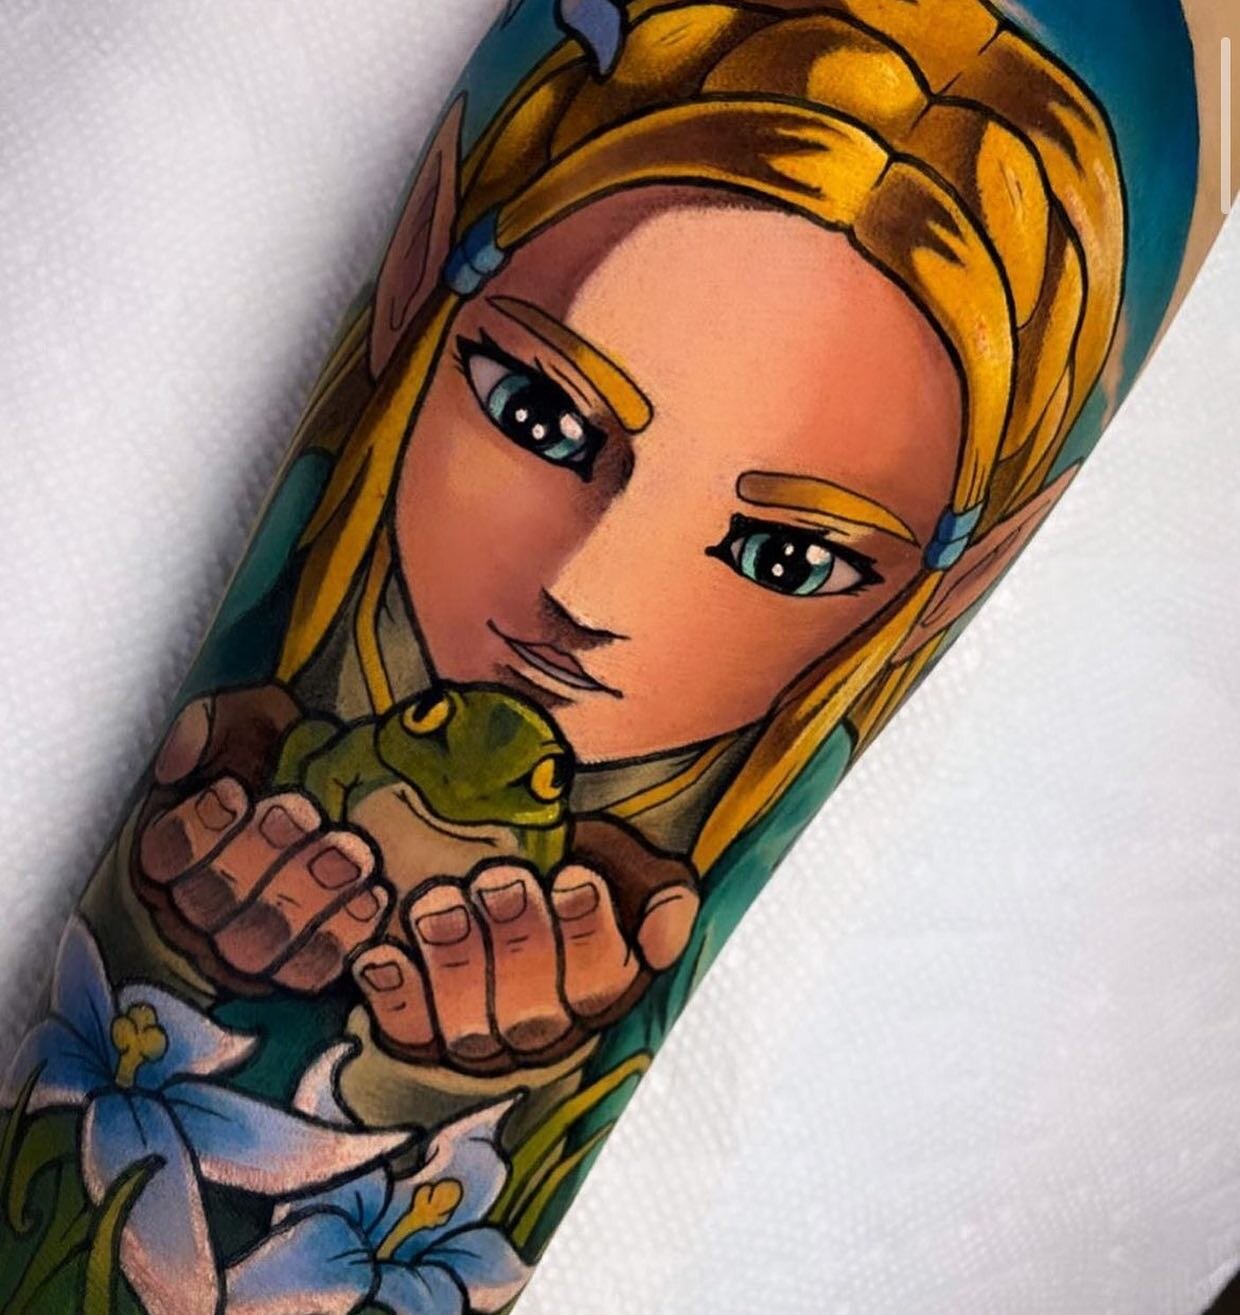 Check out this awesome Zelda piece!! 
Artist- @captain_sloth .
.
.
.
.
.
#animetattoo #anime #mangatattoos #thelegendofzelda #zeldatattoo #animeartwork #animetattooers #tattooersofnh #mangatattooers #colorfultattoo #colortattoo #neotrad #neotradi #ta